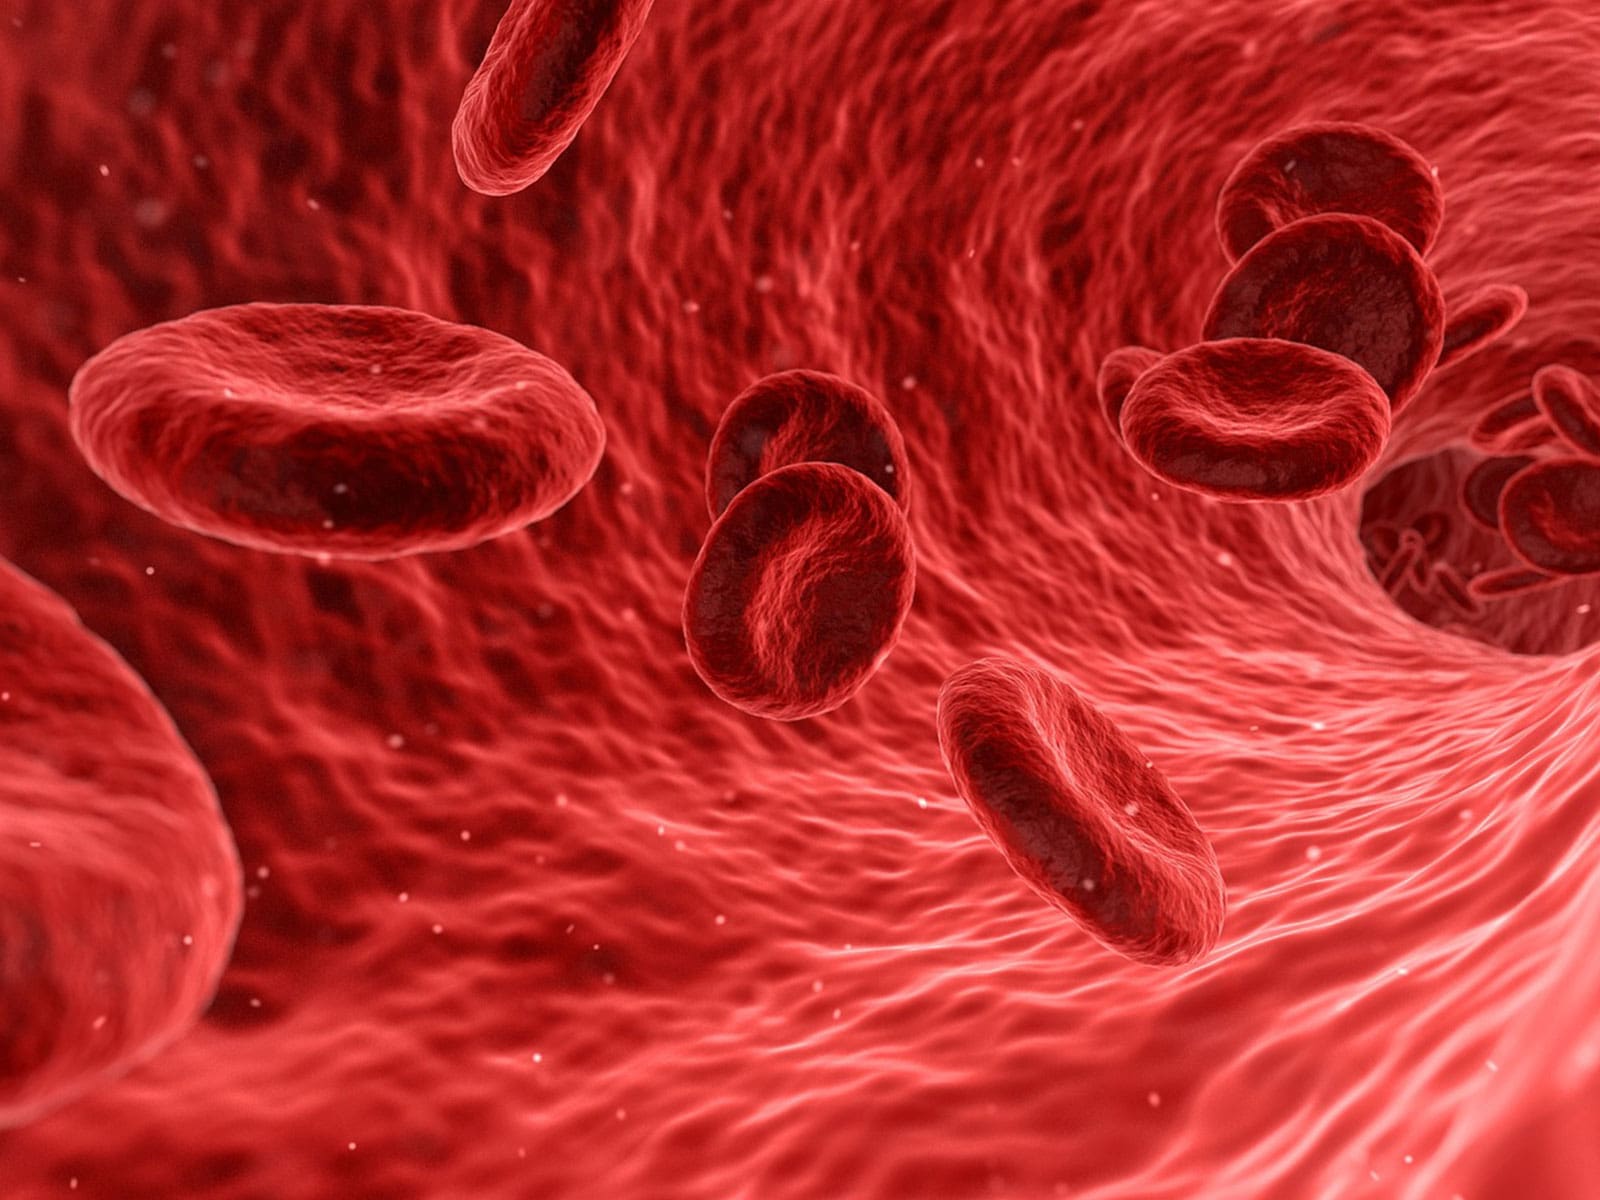 La circulation sanguine et ses anomalies